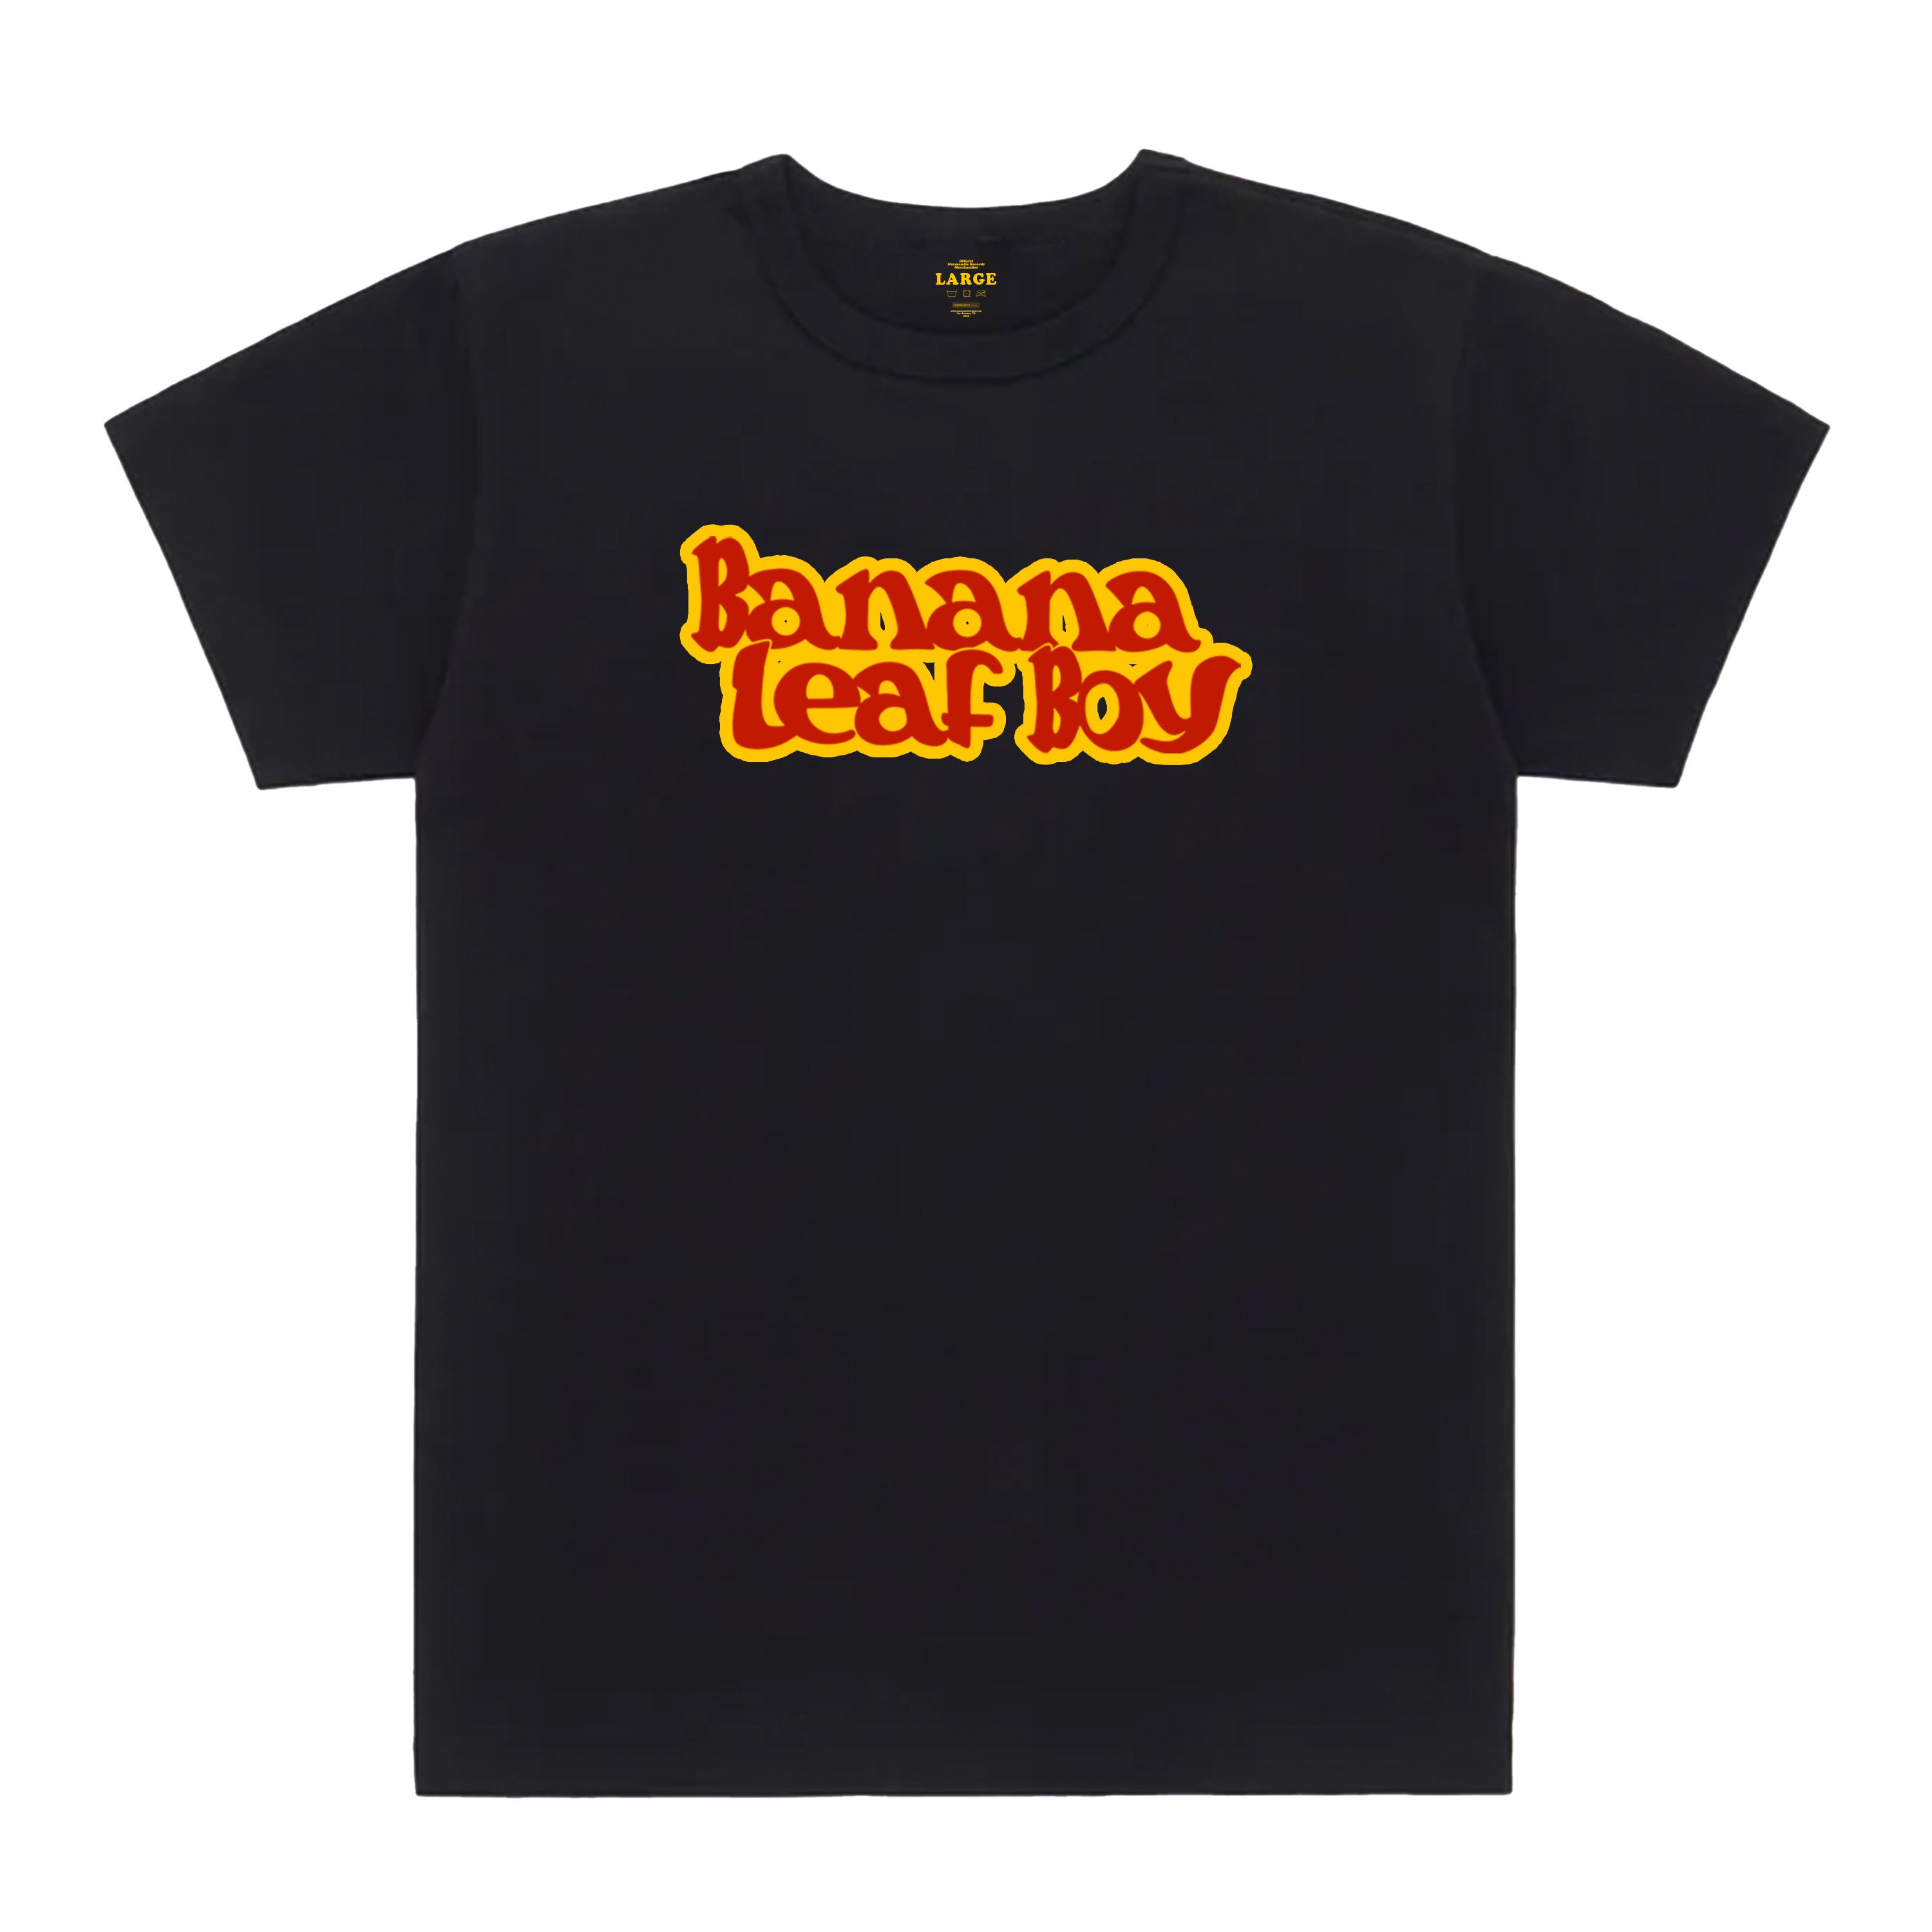 (Pre-Order) Banana Leaf Boy "Grupero" Shirt